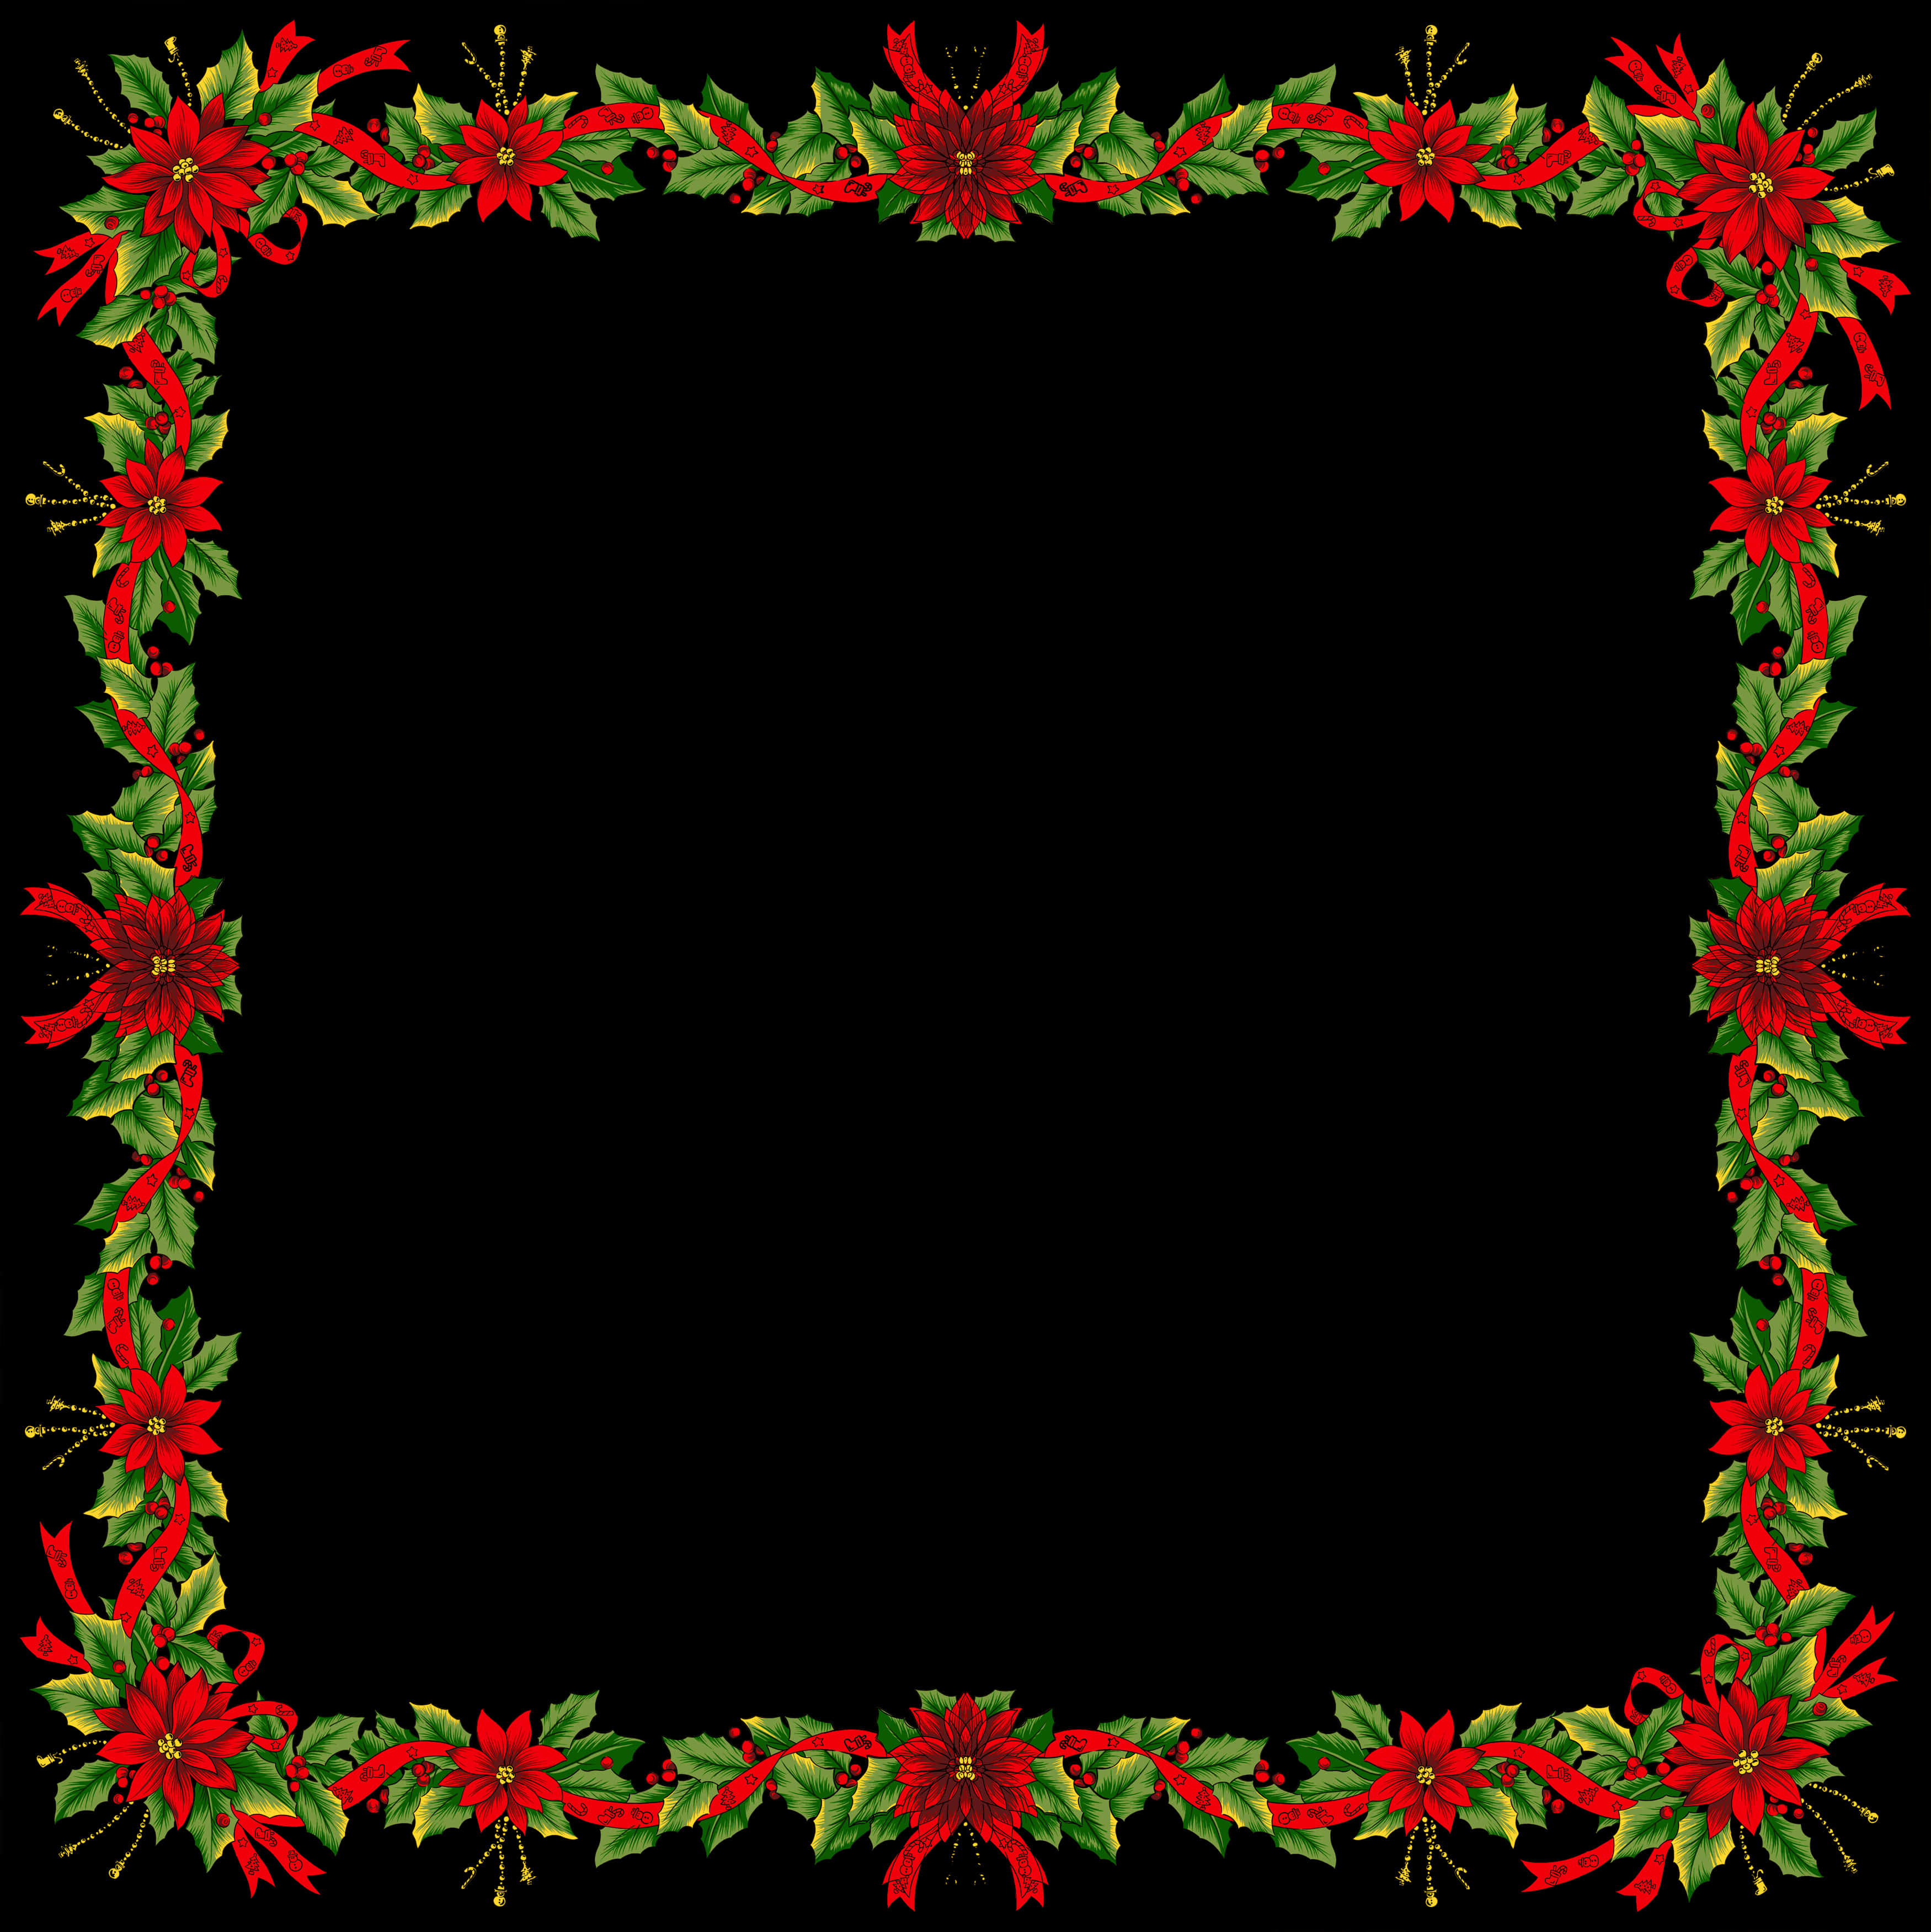 Festive Poinsettia Christmas Border